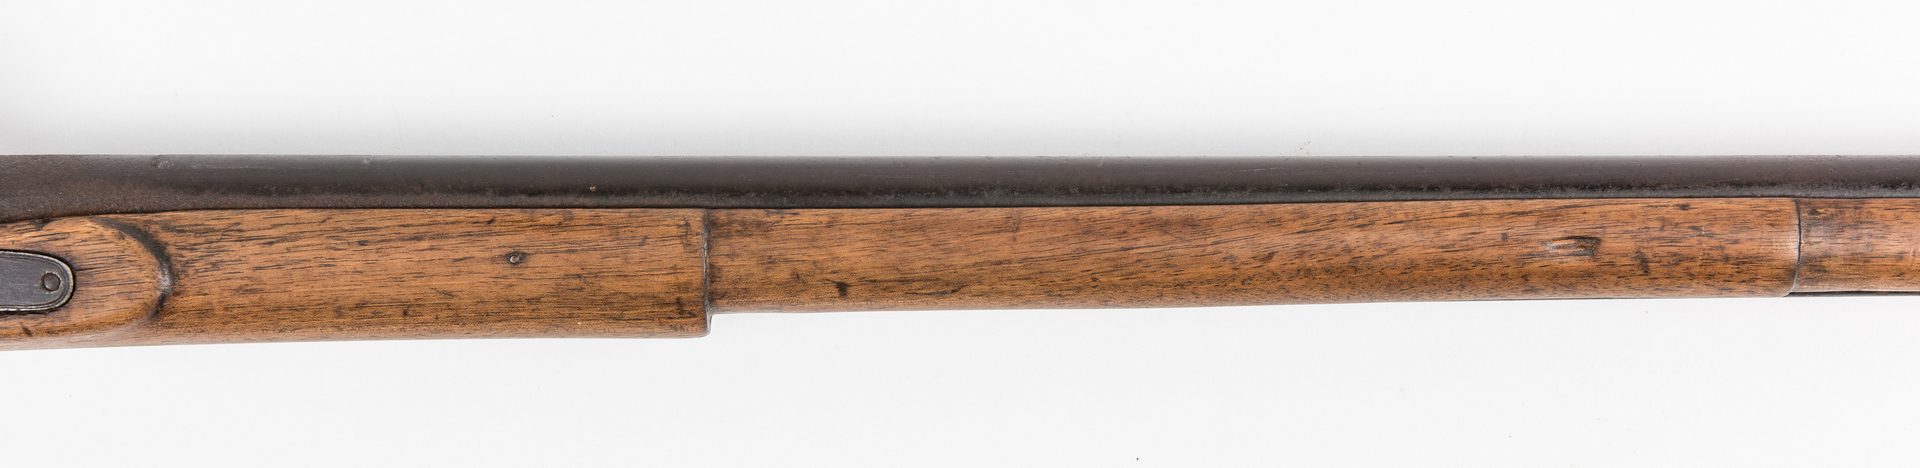 Lot 321: Barnett London Percussion Musket-Rifle, Enfield pattern, .577 cal